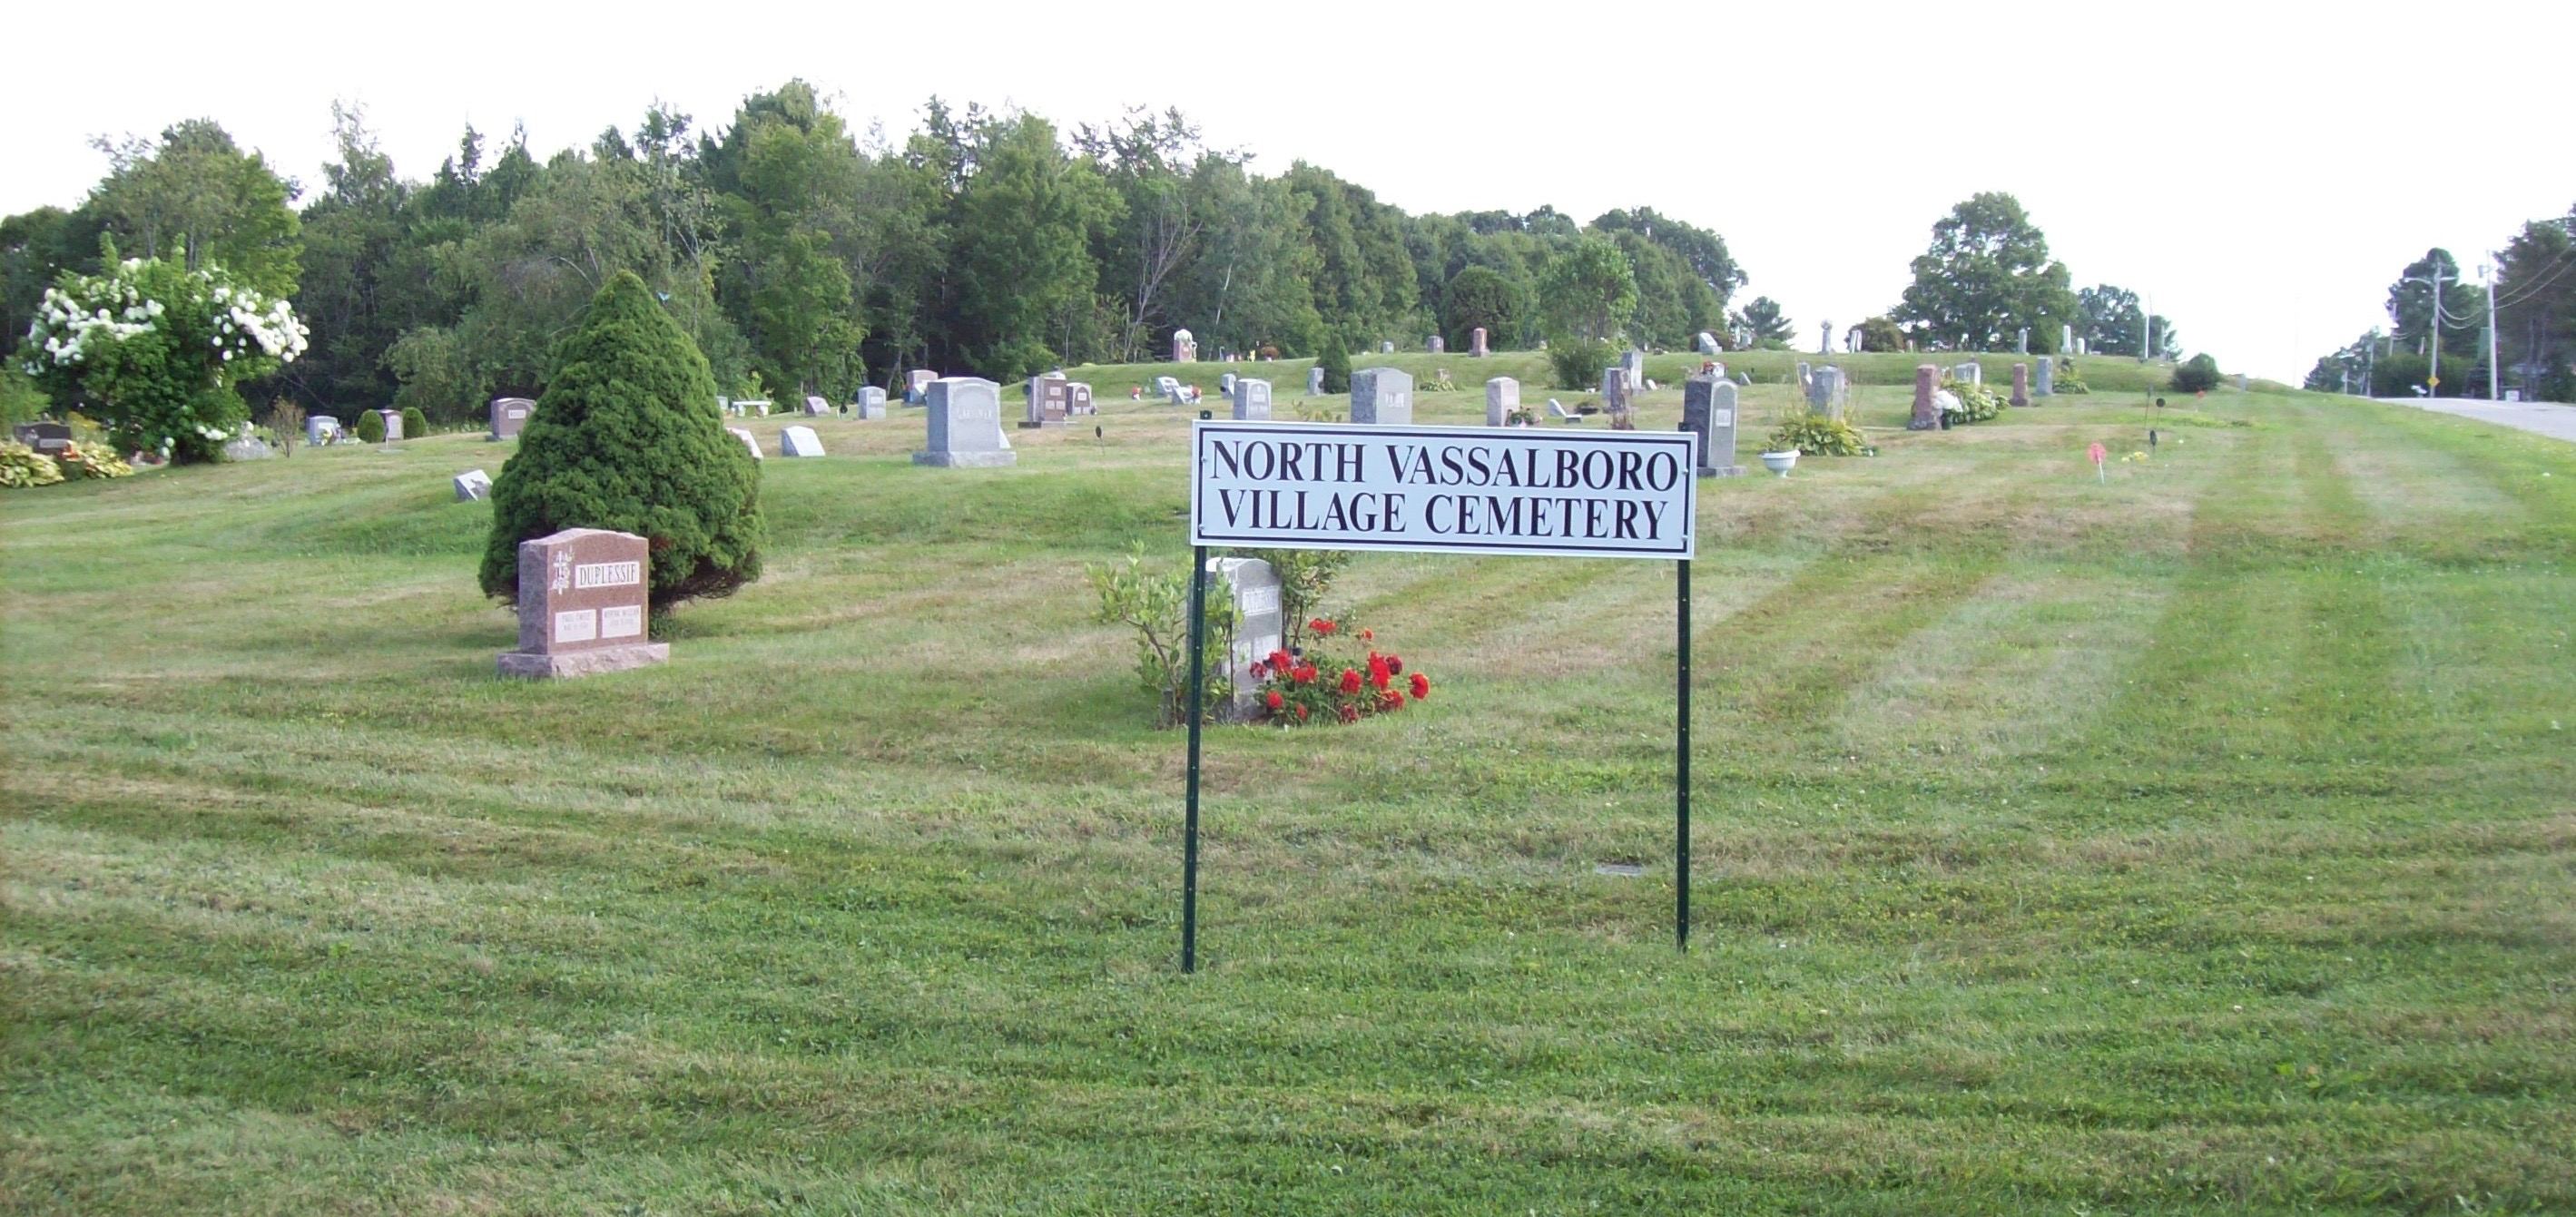 North Vassalboro Village Cemetery